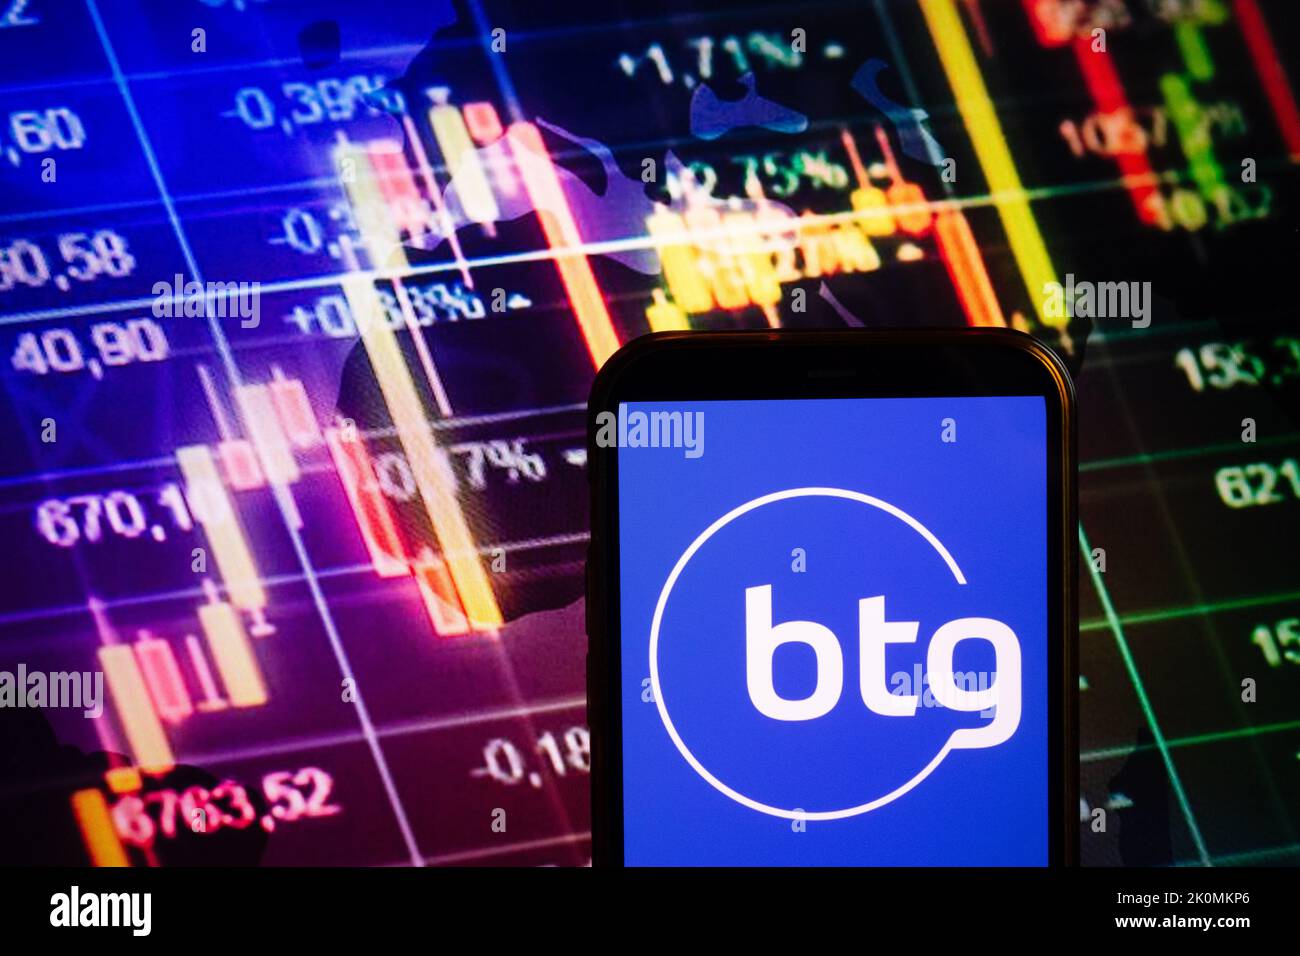 KONSKIE, POLAND - September 10, 2022: Smartphone displaying logo of BTG Pactual company on stock exchange diagram background Stock Photo